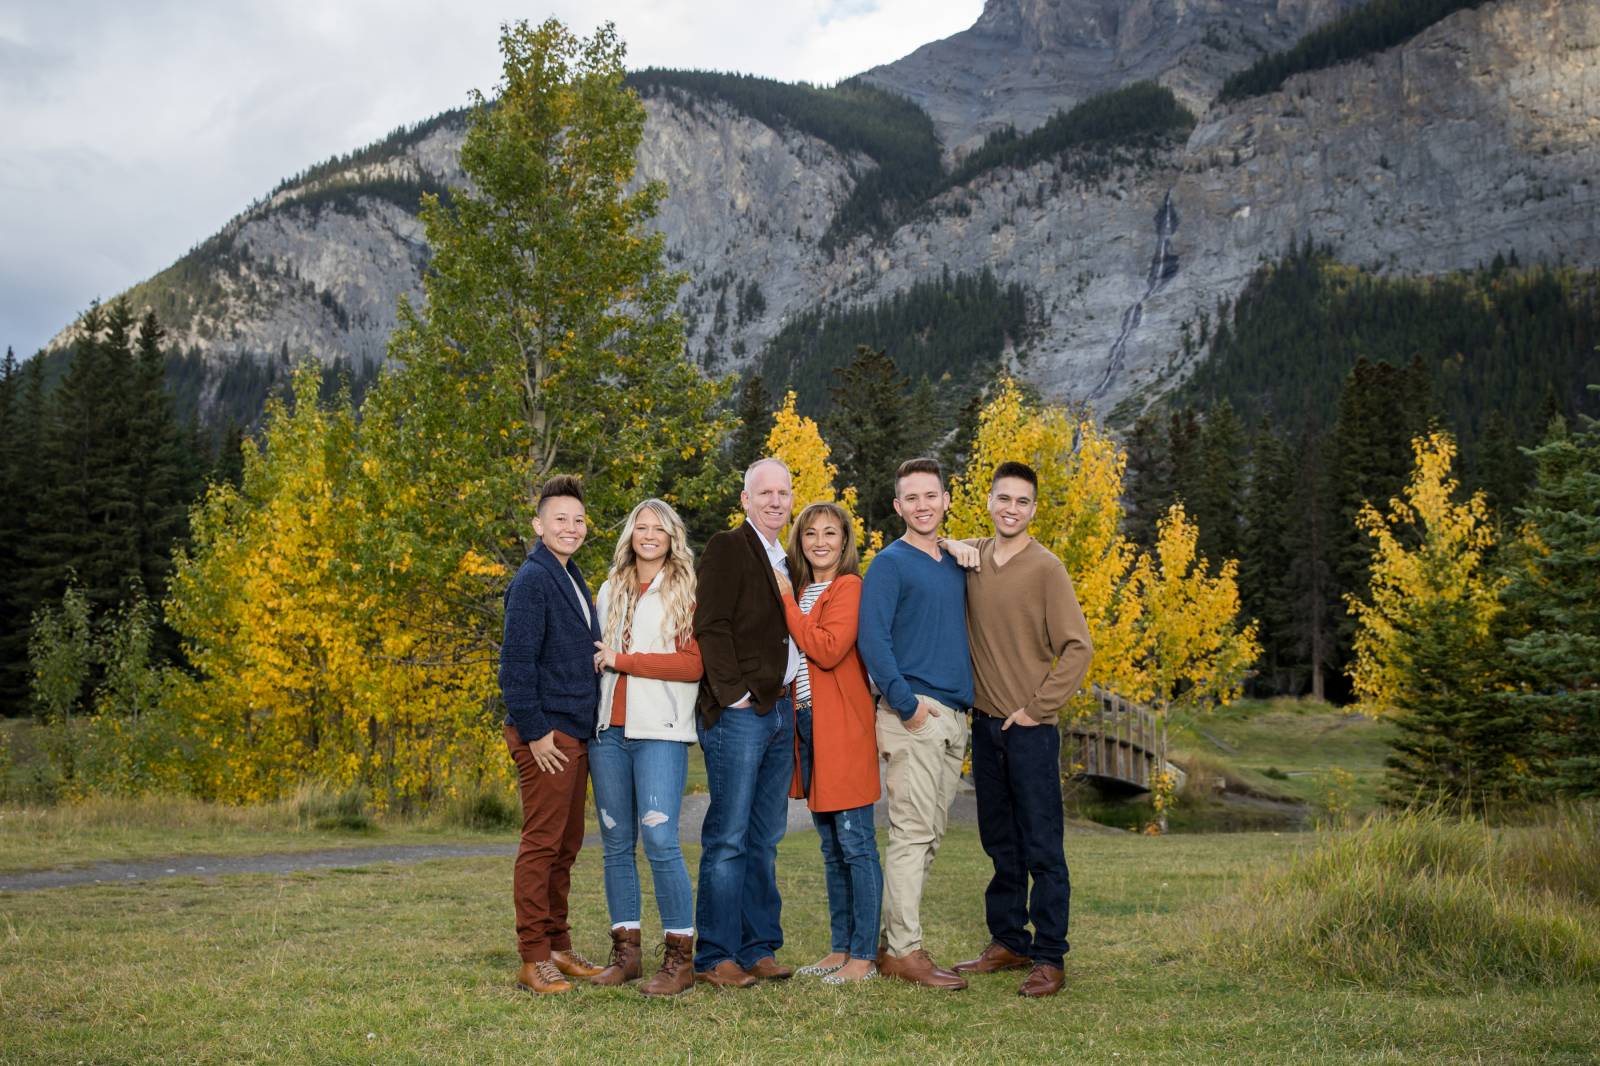 Banff Family Photographer, Family Photo session ideas, family poses, outdoor photo session, Banff Na